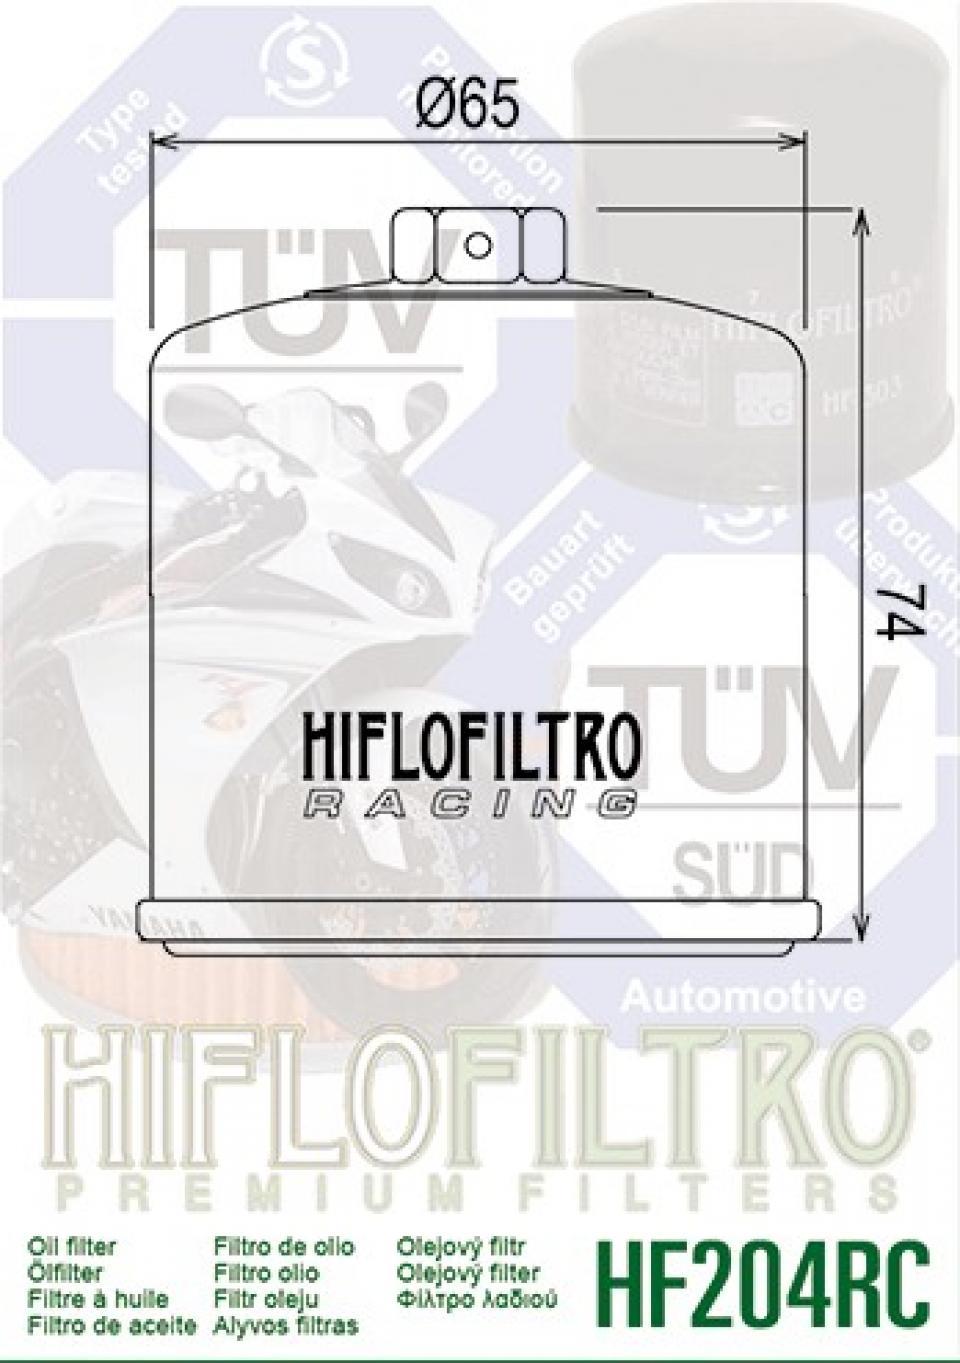 Filtre à huile Hiflofiltro pour Moto Yamaha 600 YZF R6 2006 à 2015 HF204RC / 5GH13440-20 Neuf